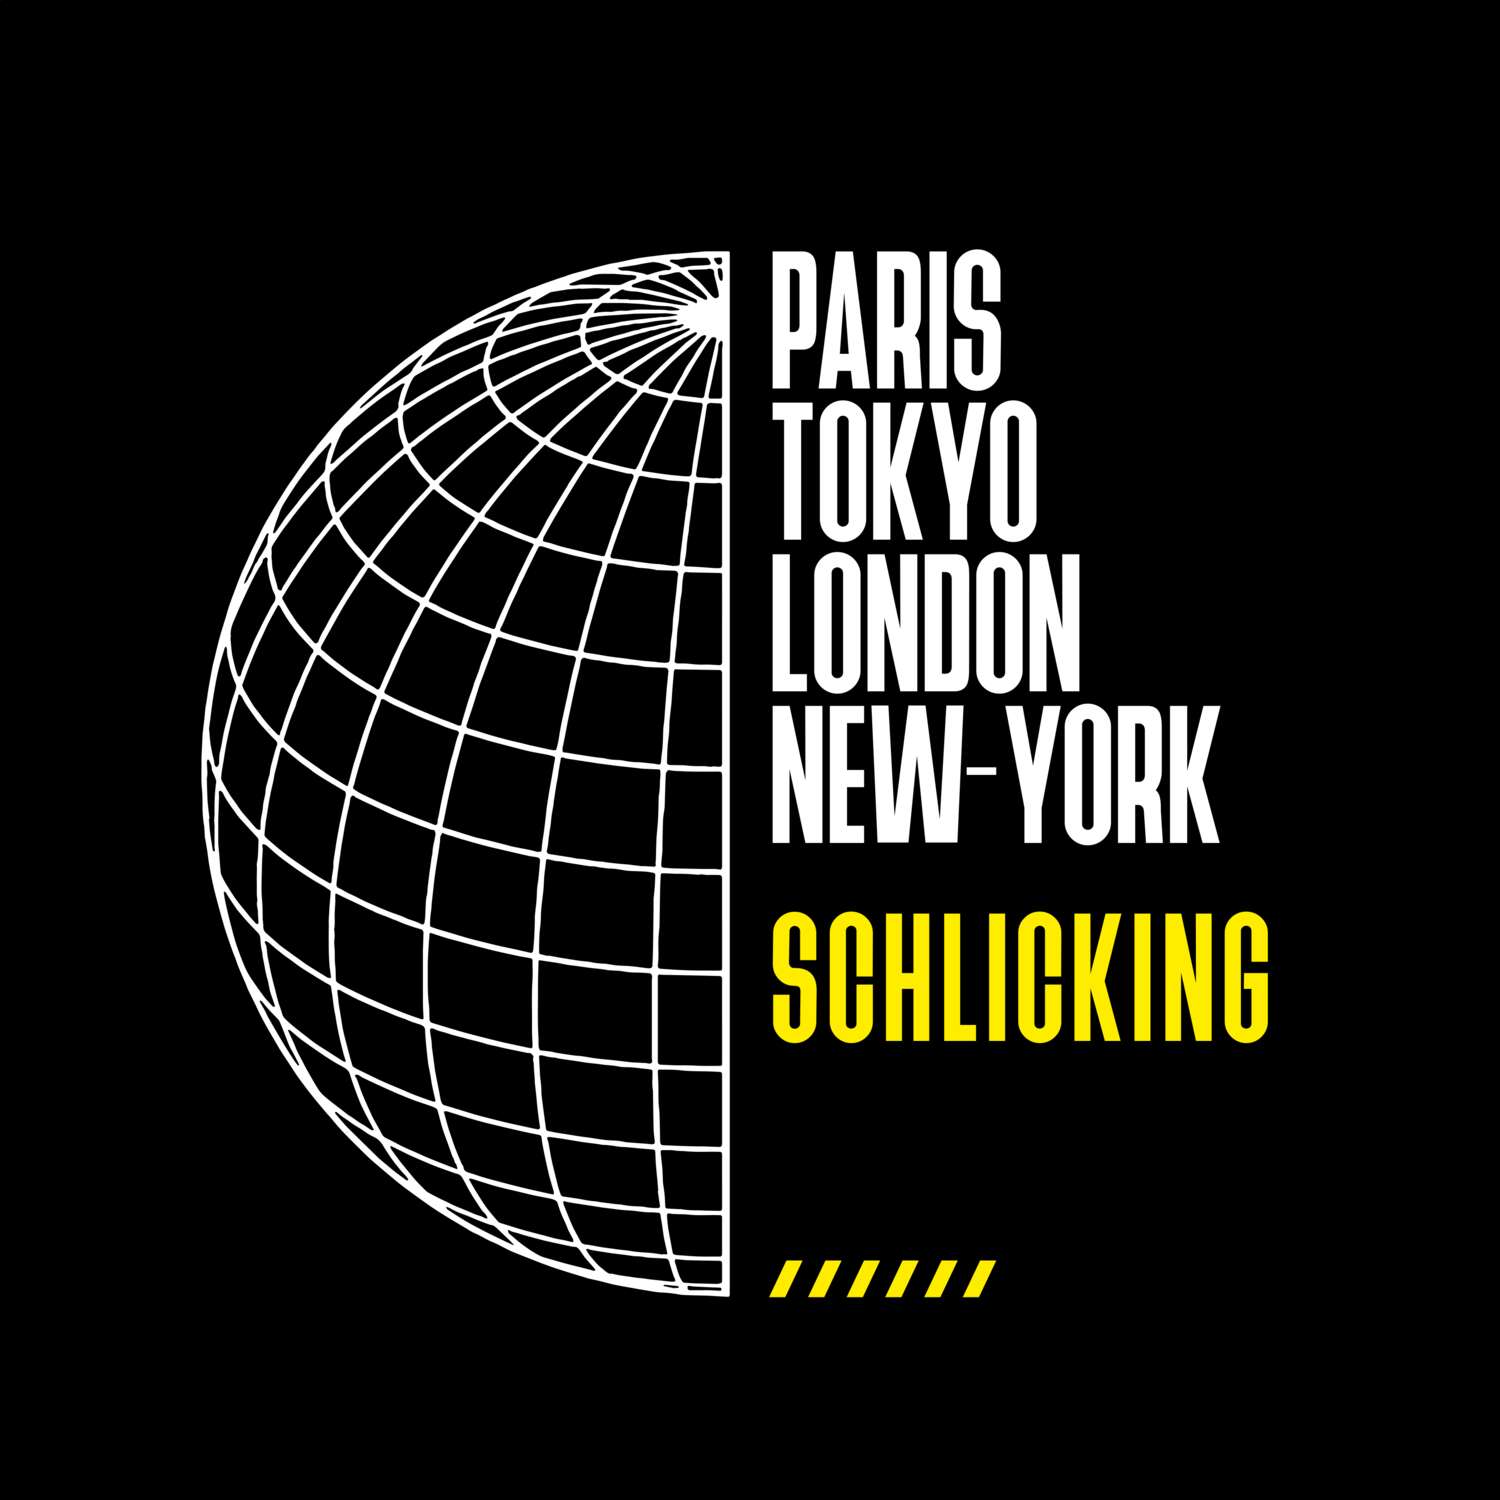 Schlicking T-Shirt »Paris Tokyo London«